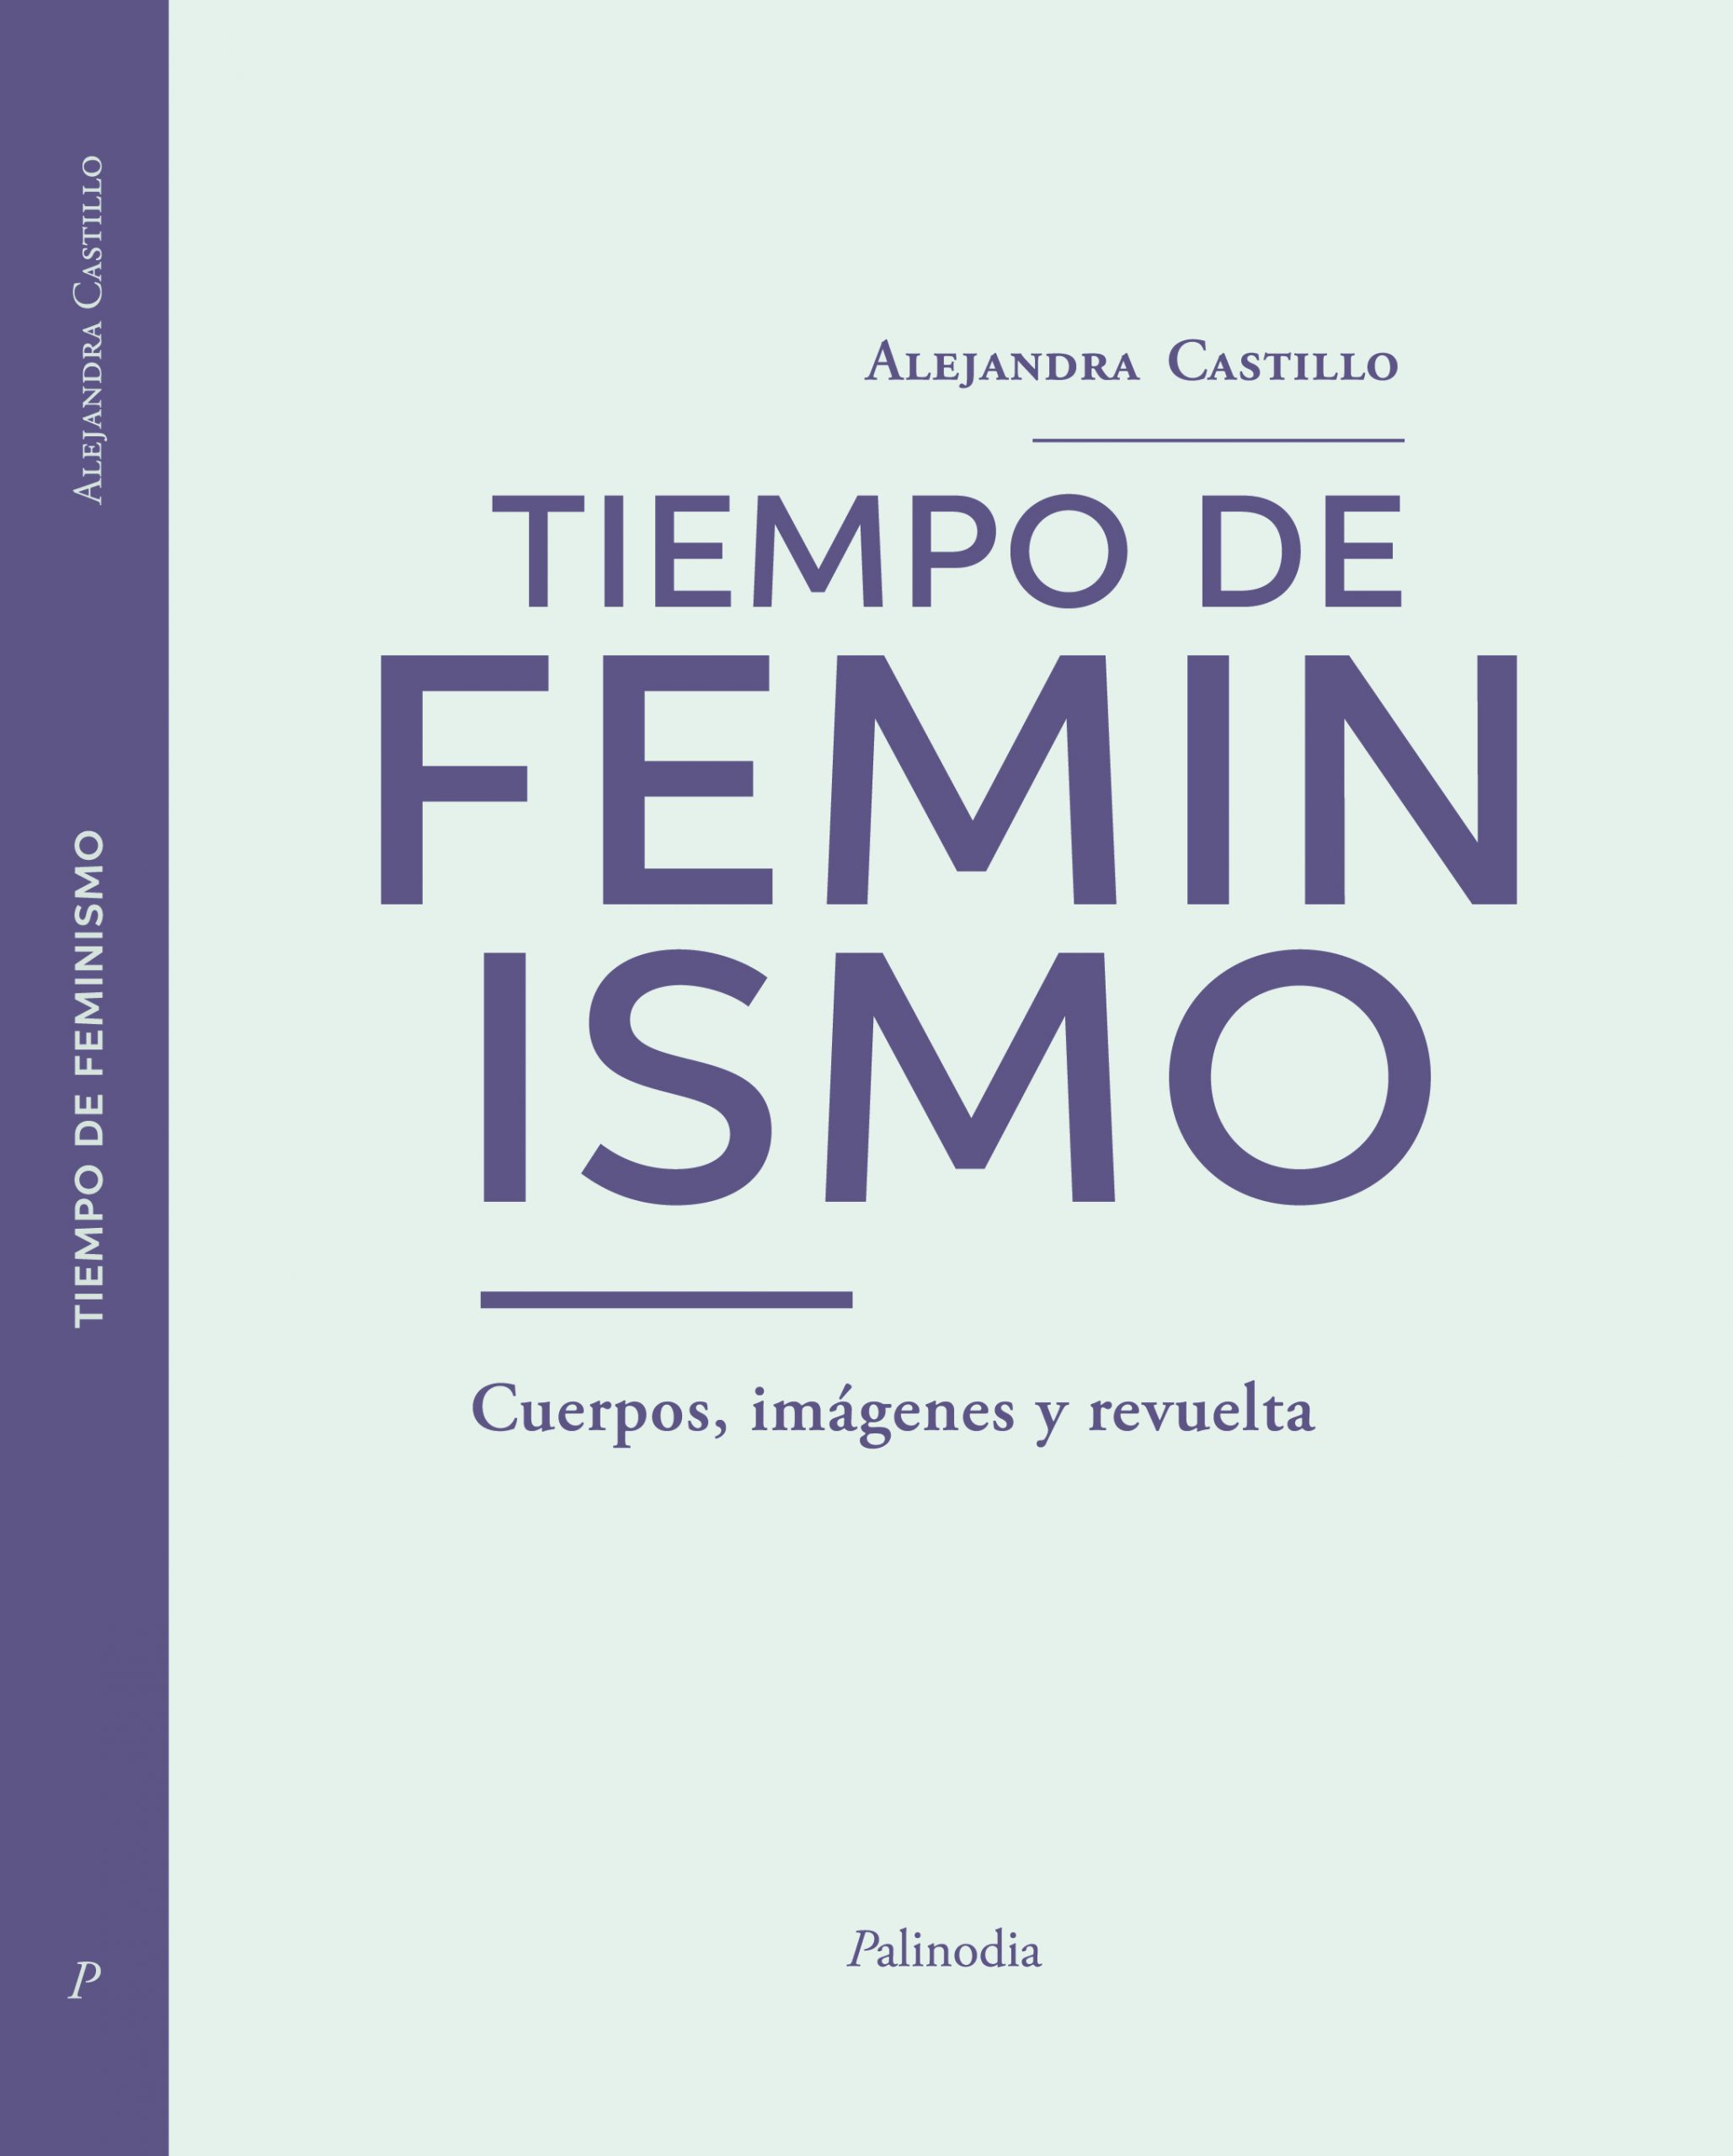 Portada_Tiempo de feminismo-01